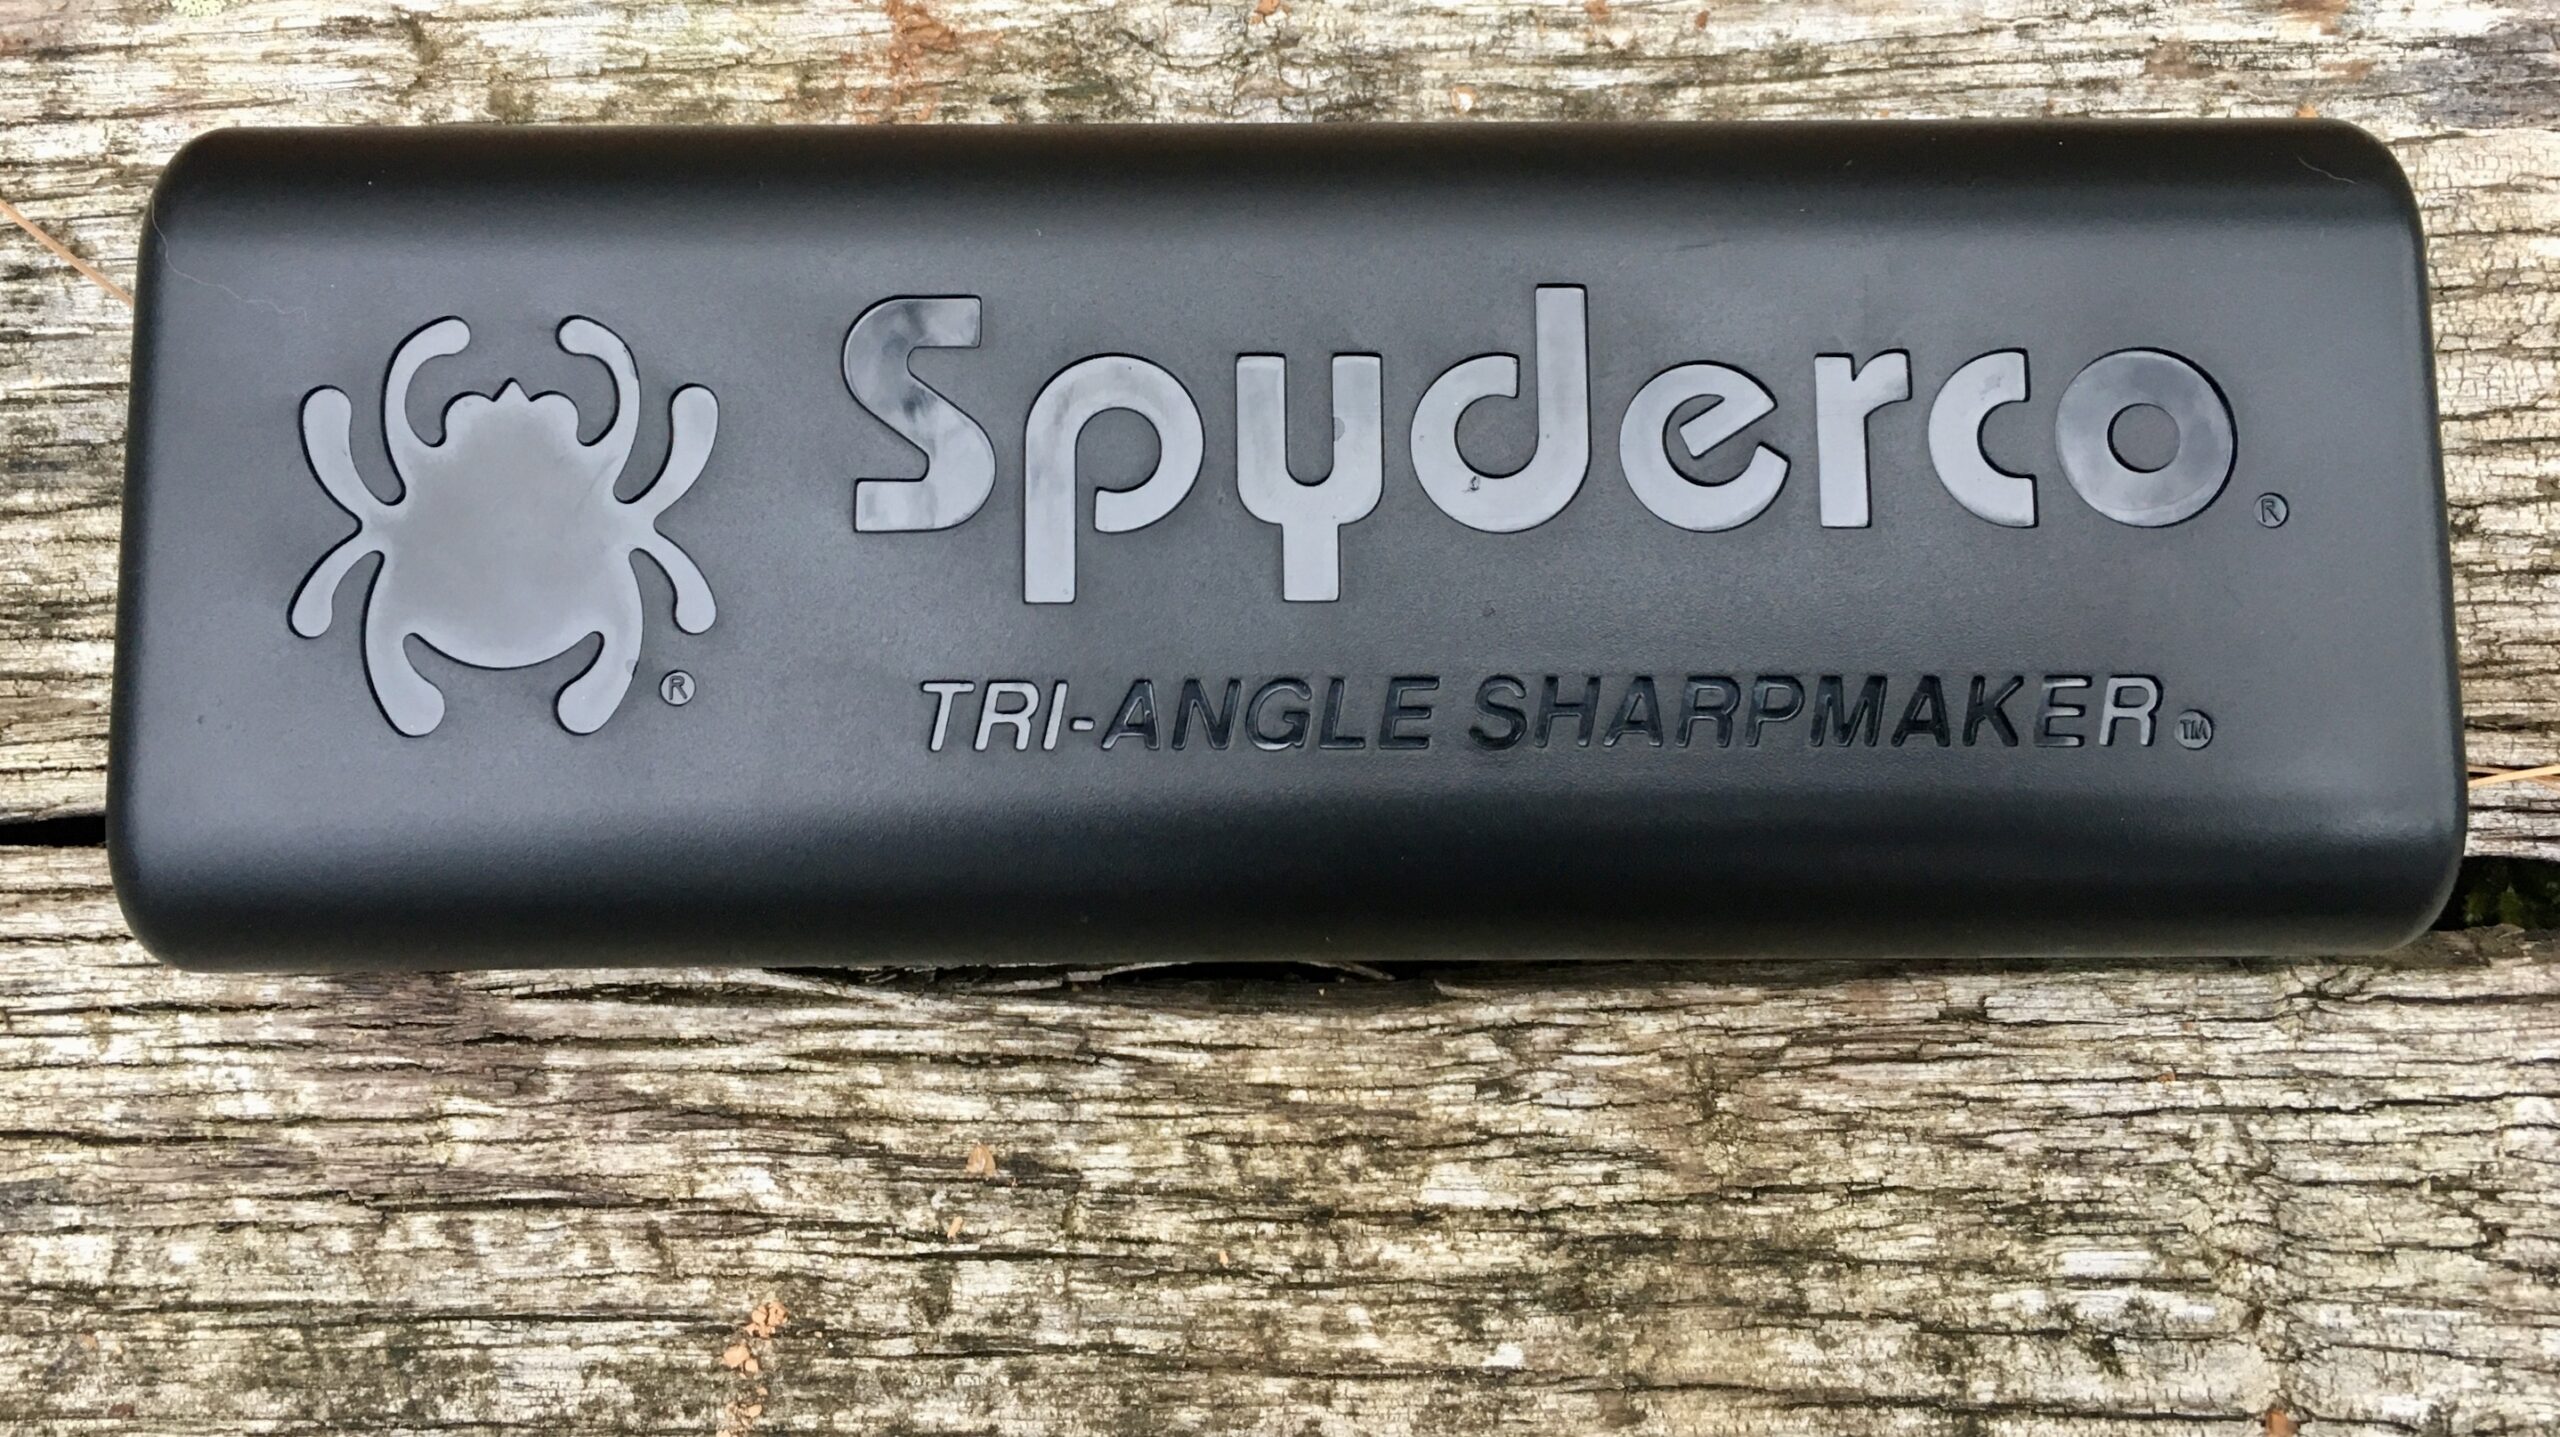 https://swiftsilentdeadly.com/wp-content/uploads/2019/12/Spyderco-Sharpmaker-0-scaled.jpg